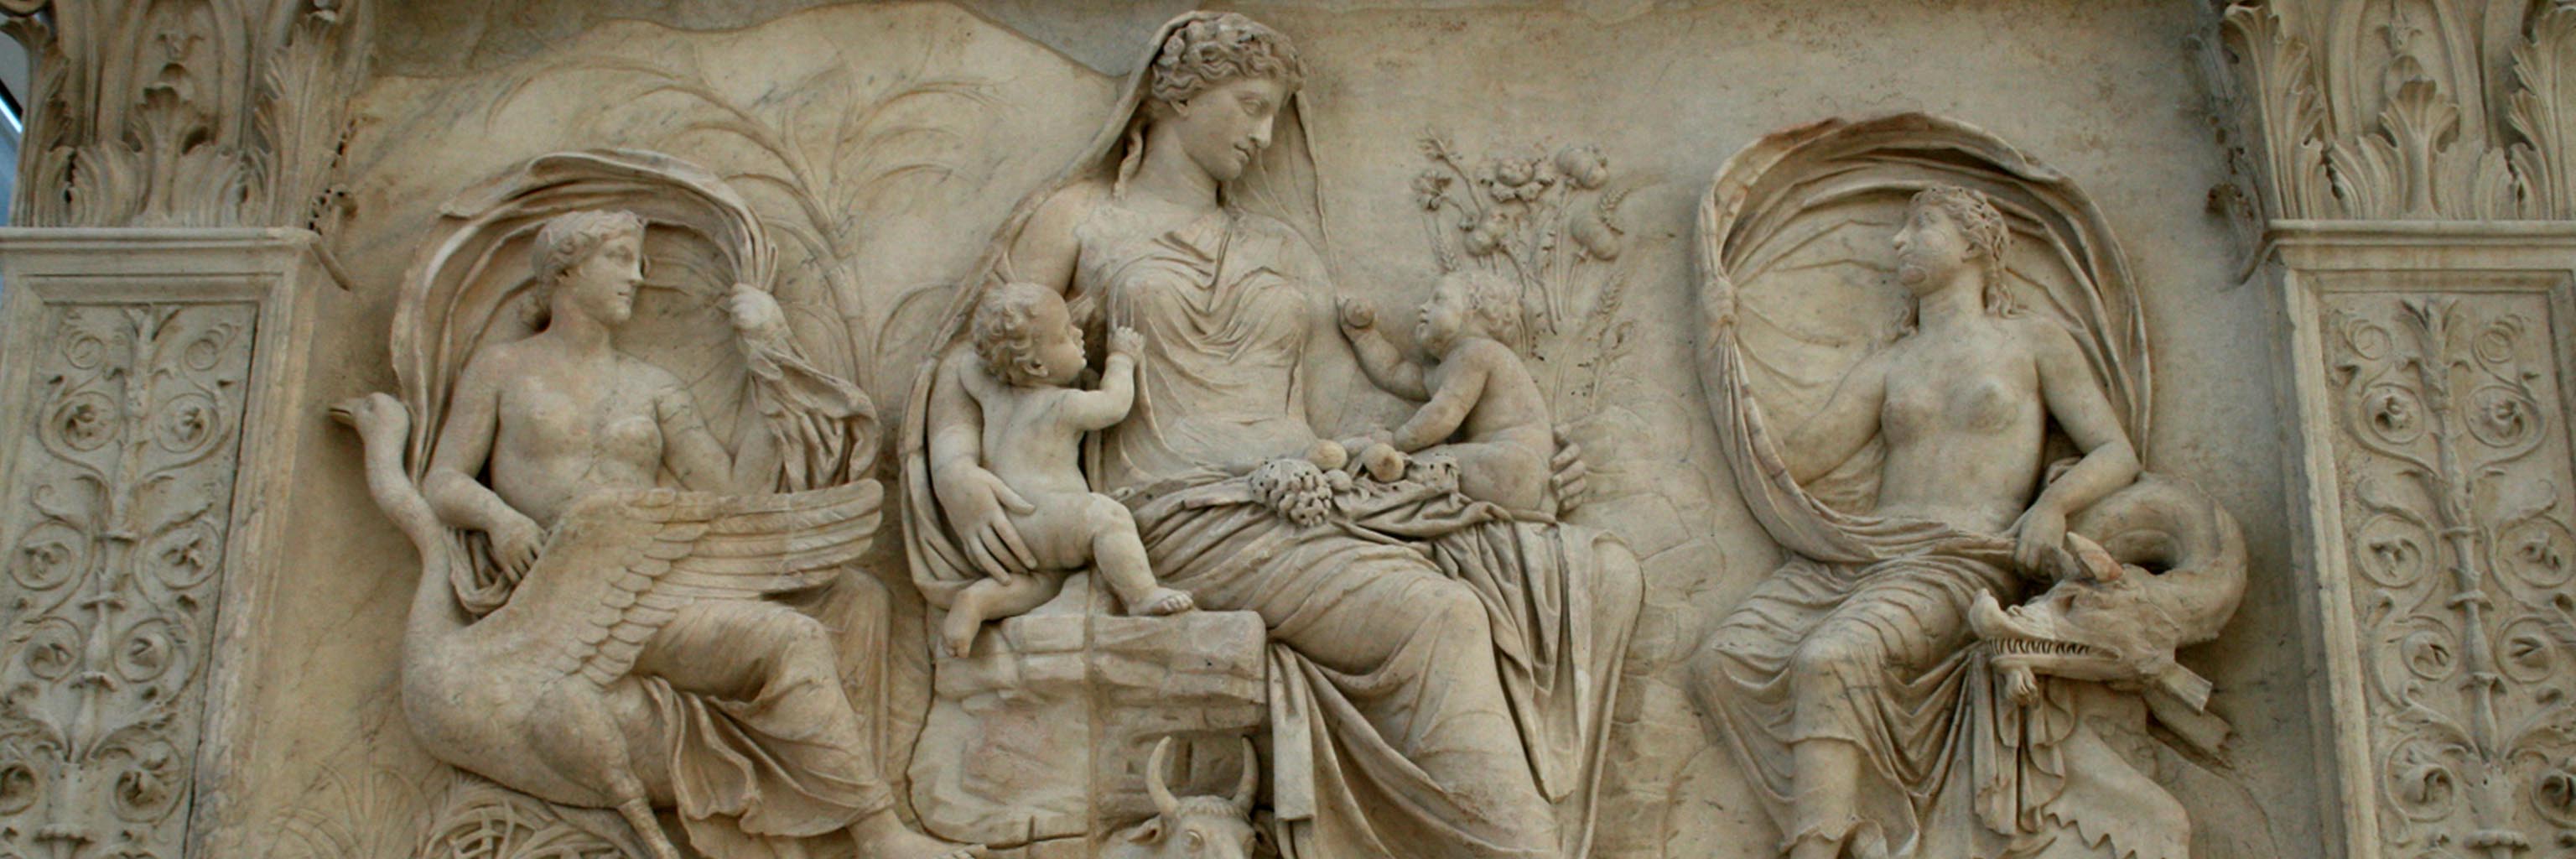 Ara Pacis statues in Rome